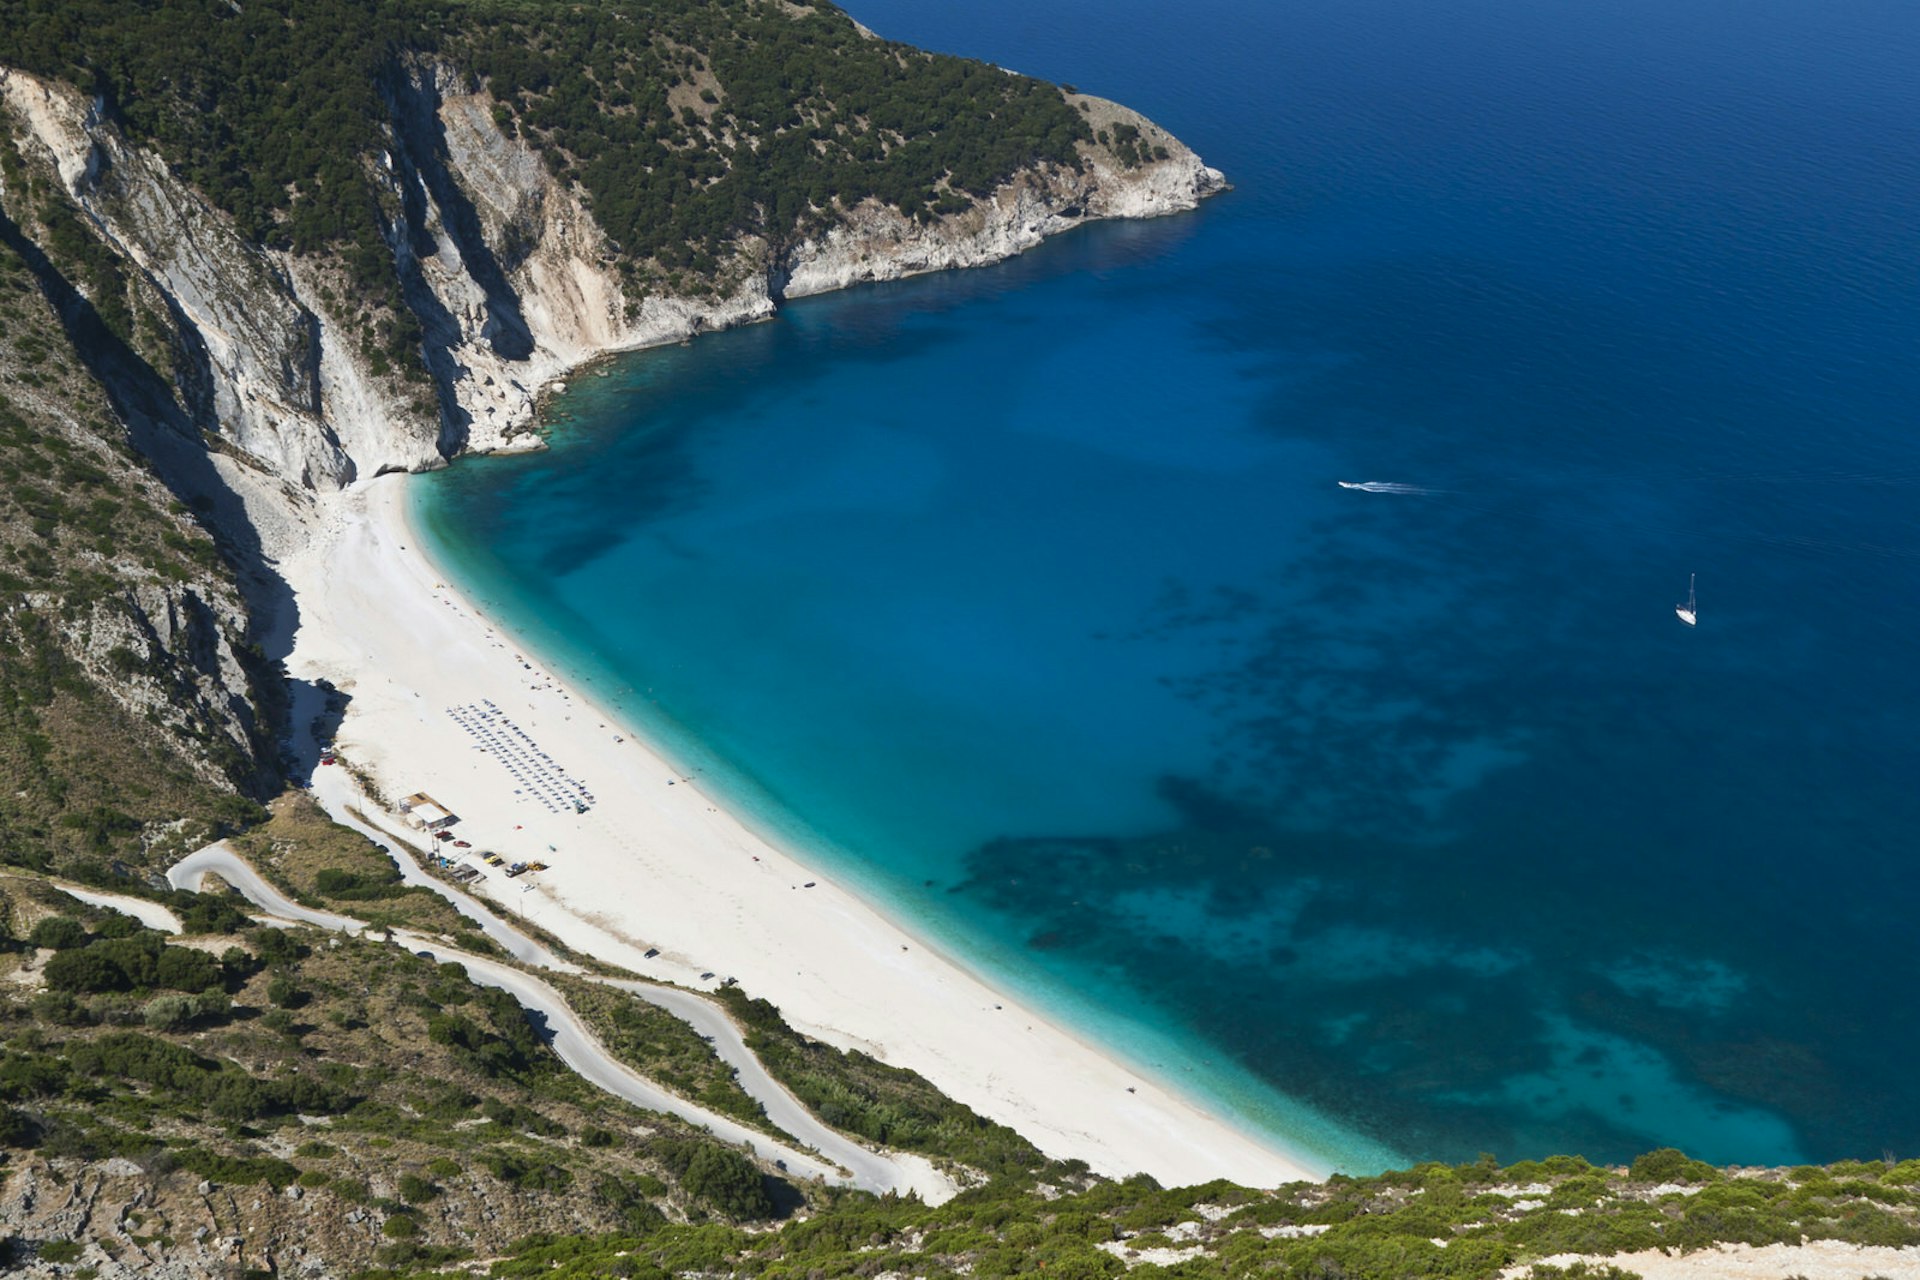 Myrtos Beach on Kefalonia © Panos Karas / Shutterstock